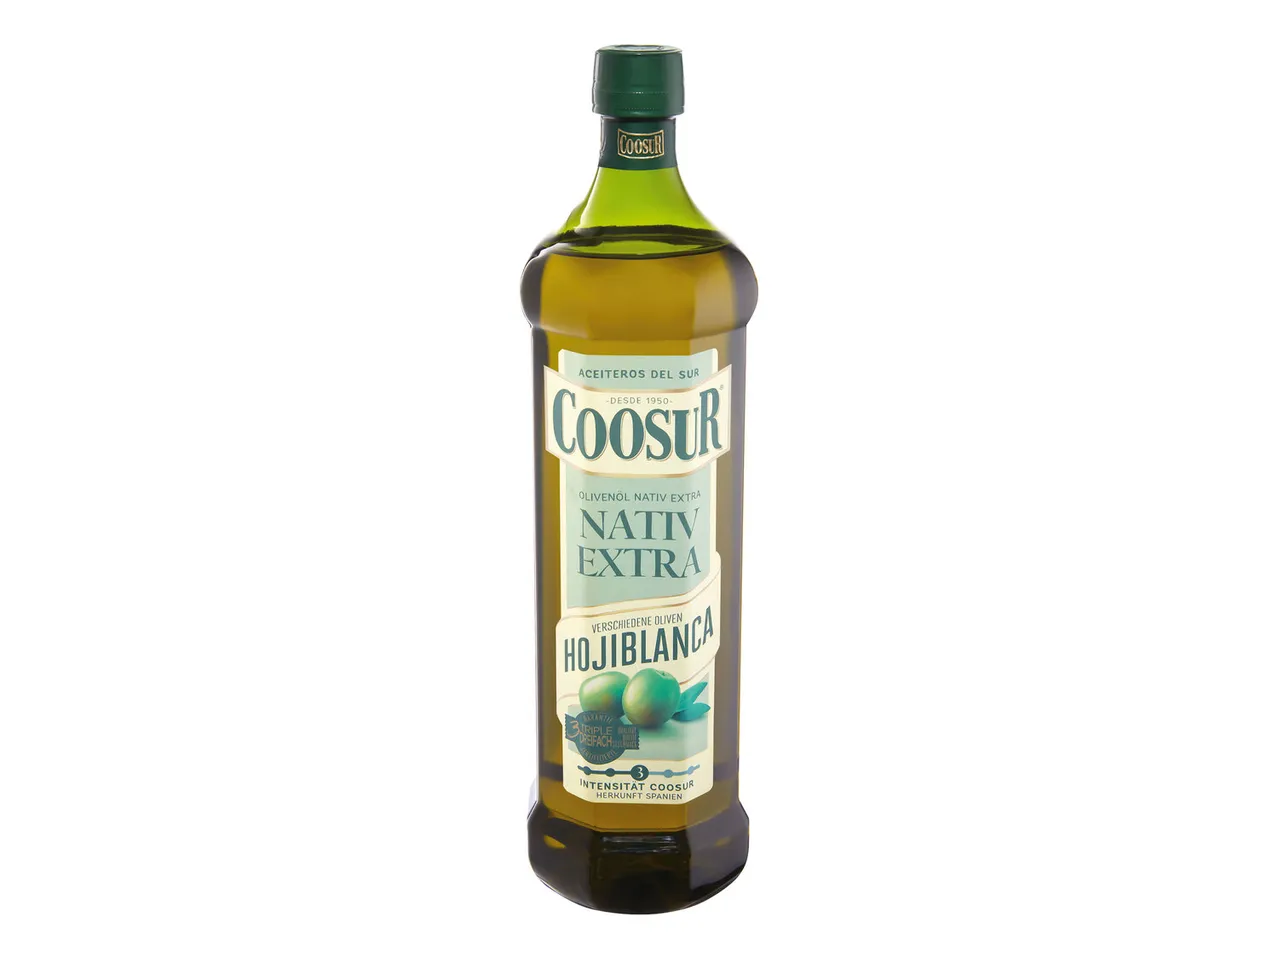 Coosur Olivenöl Hojiblanca